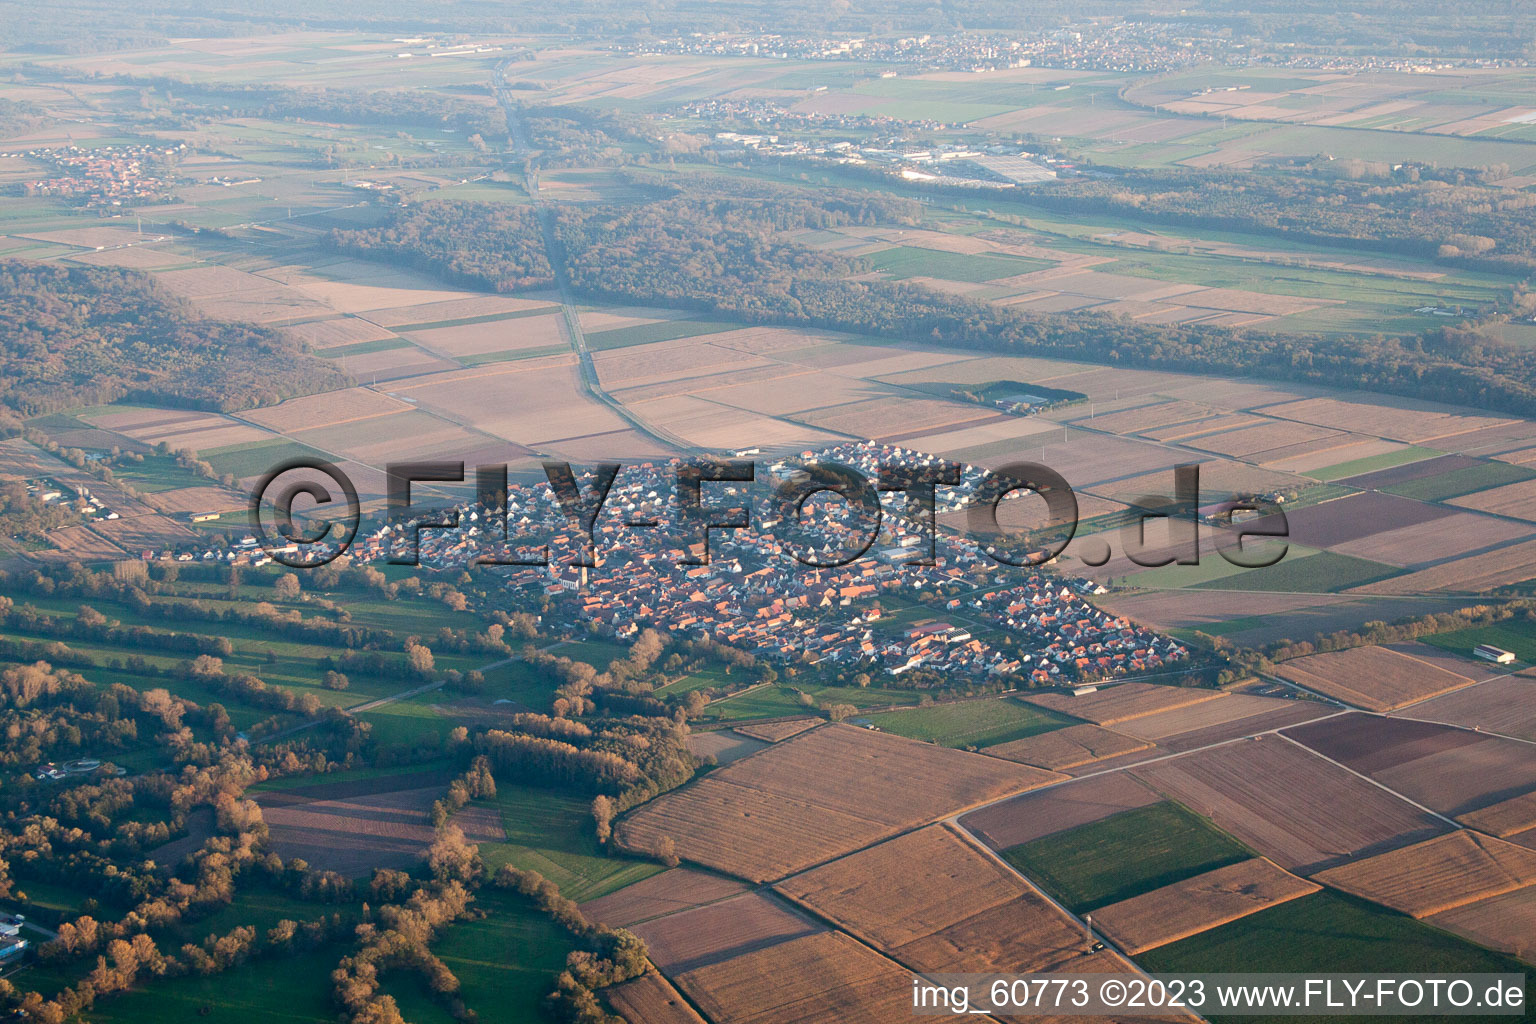 Bird's eye view of Steinweiler in the state Rhineland-Palatinate, Germany